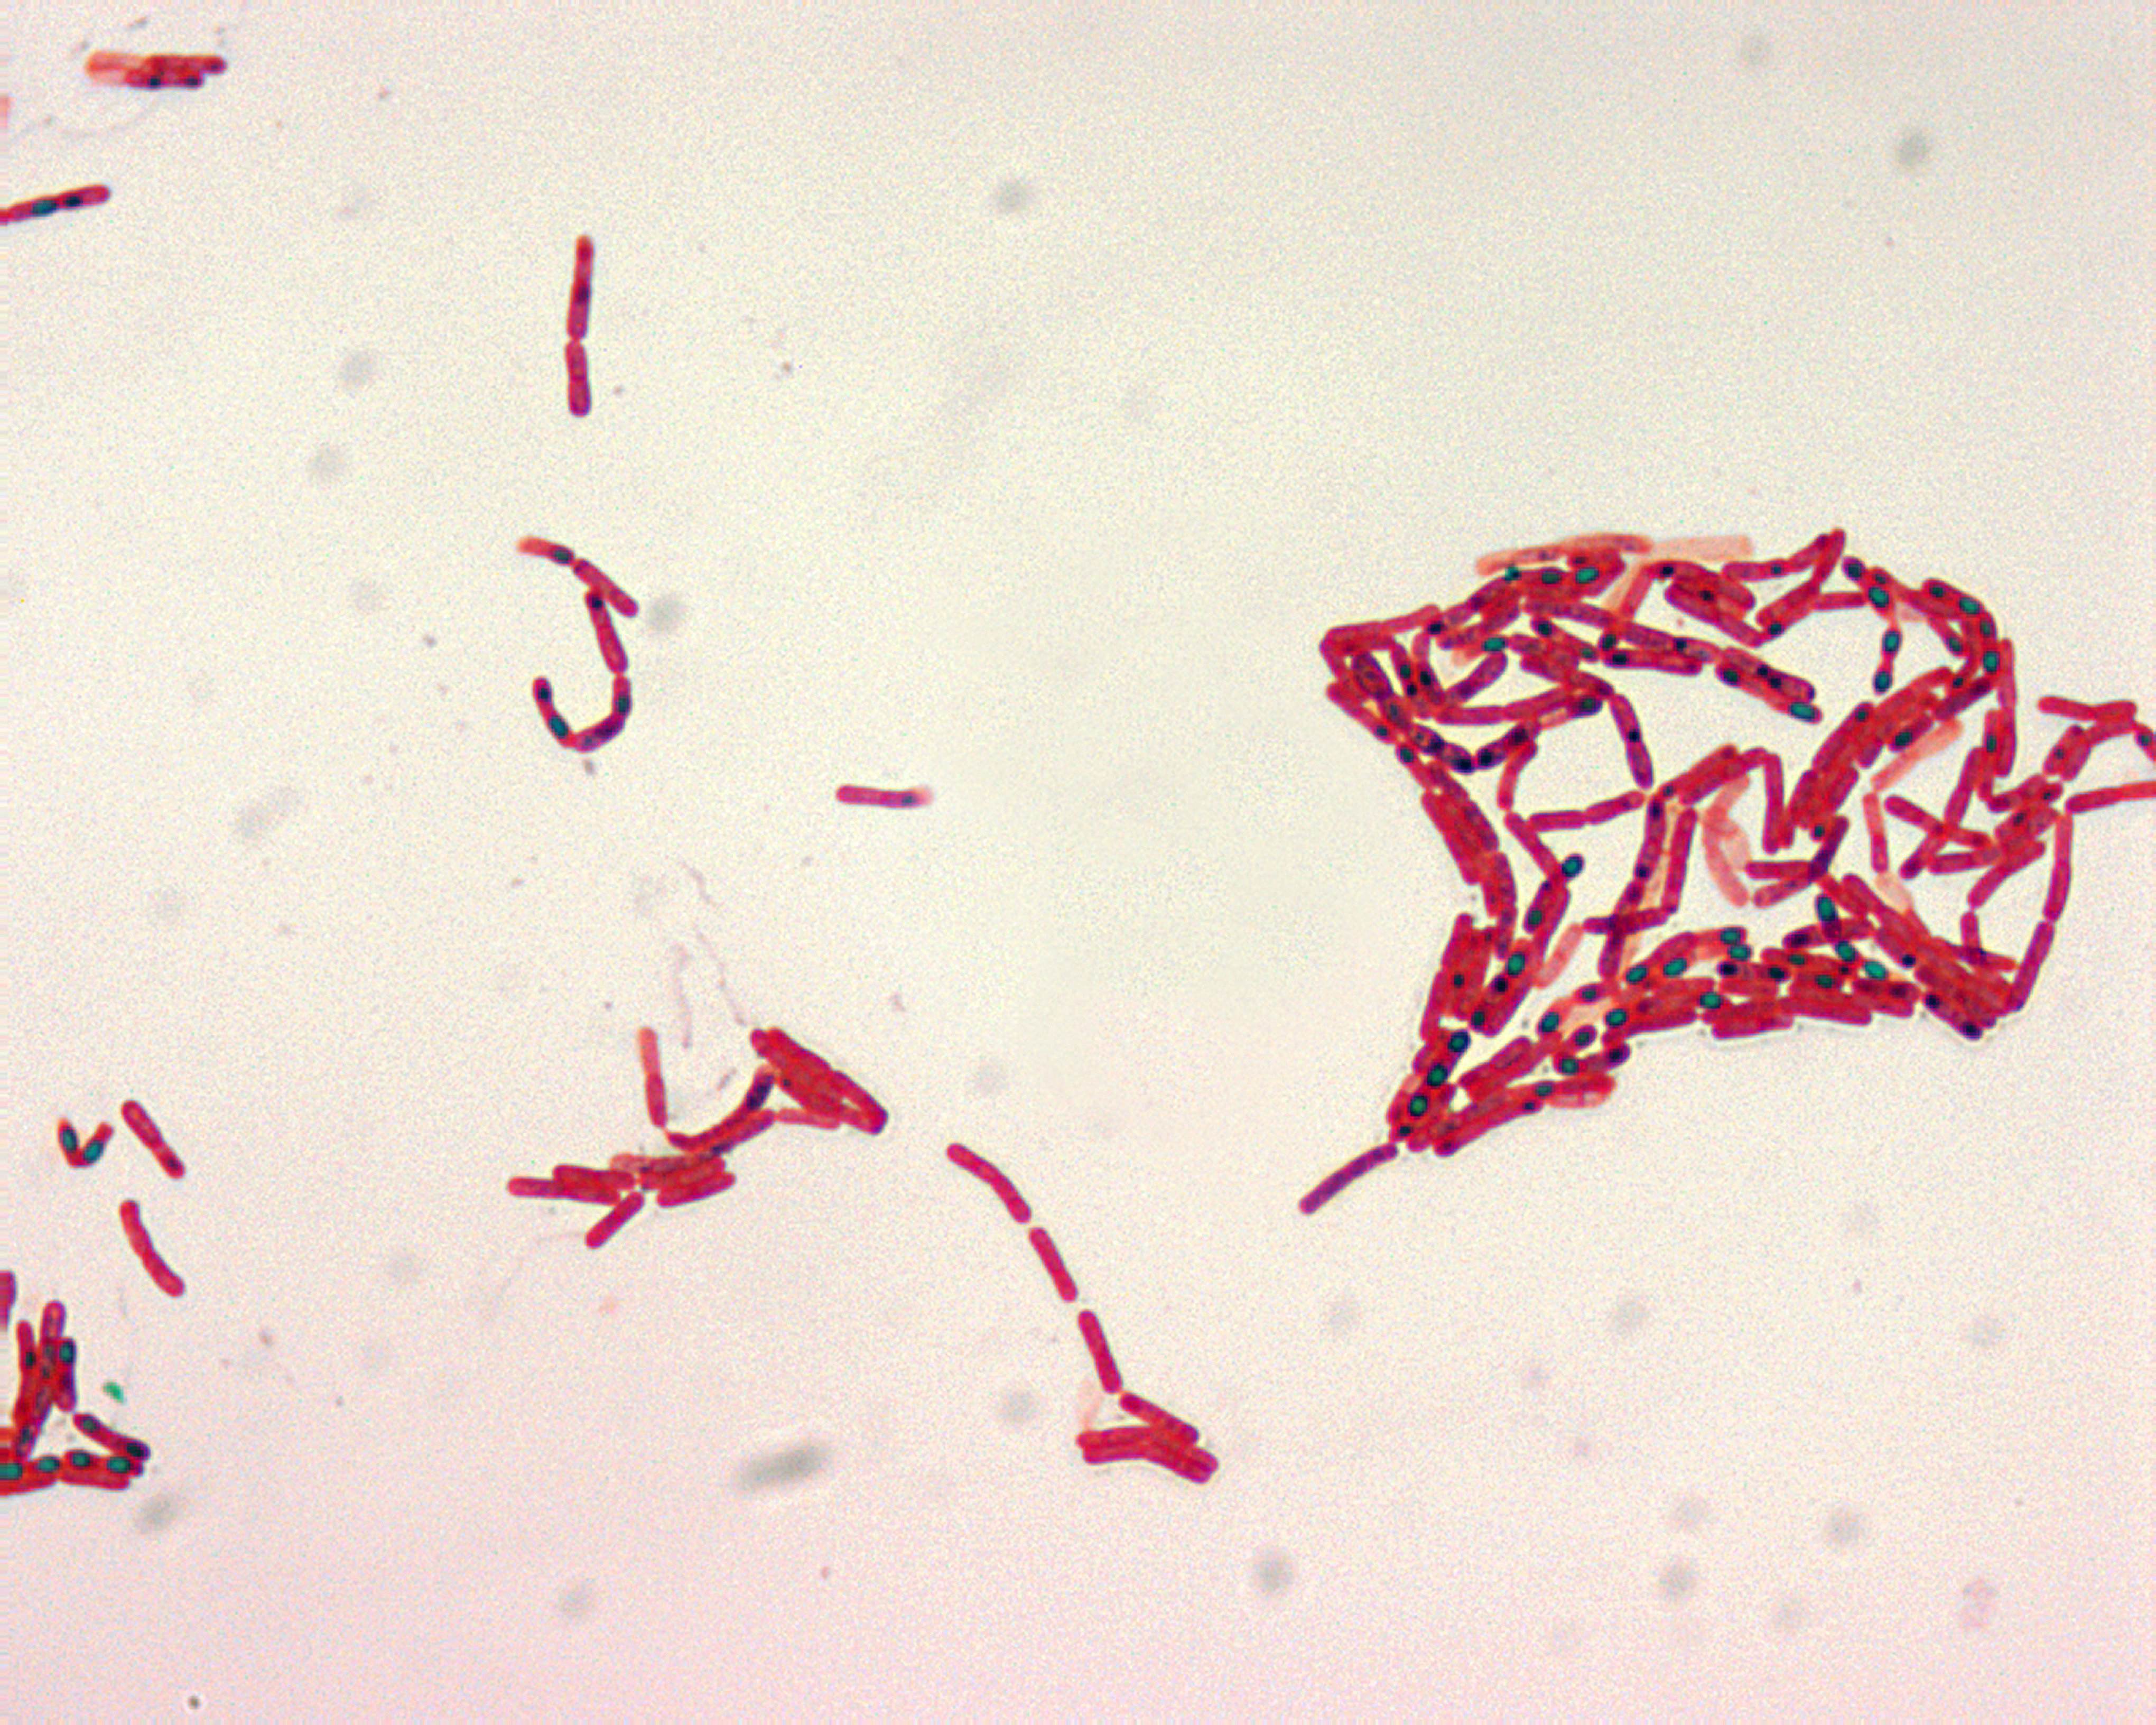 Окраска спор бактерий. Сенная палочка микроскопия. Окраска Ожешко Bacillus anthracis. Bacillus megaterium споры. Bacillus anthracis микроскопия.